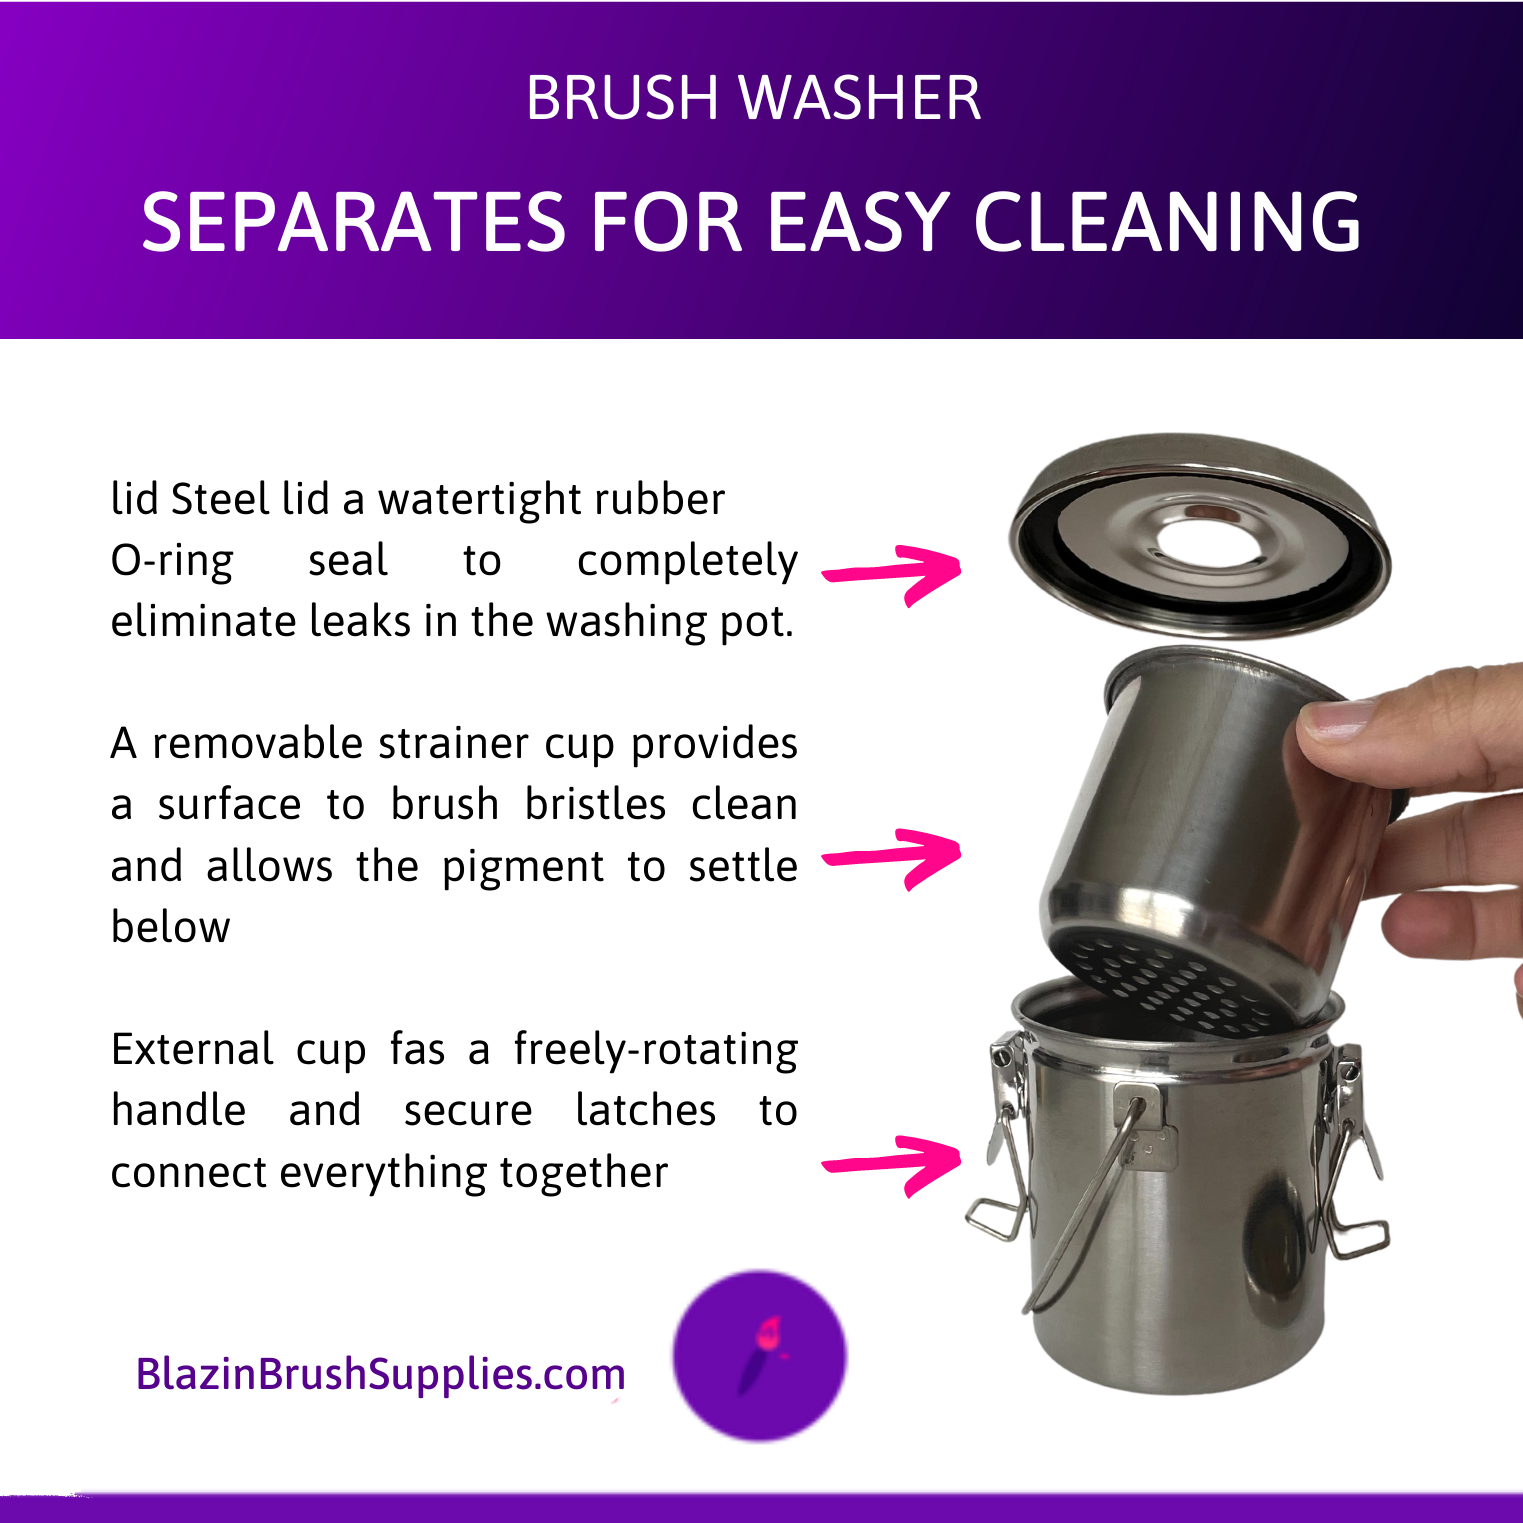 Brush Washer – Blazin Brush